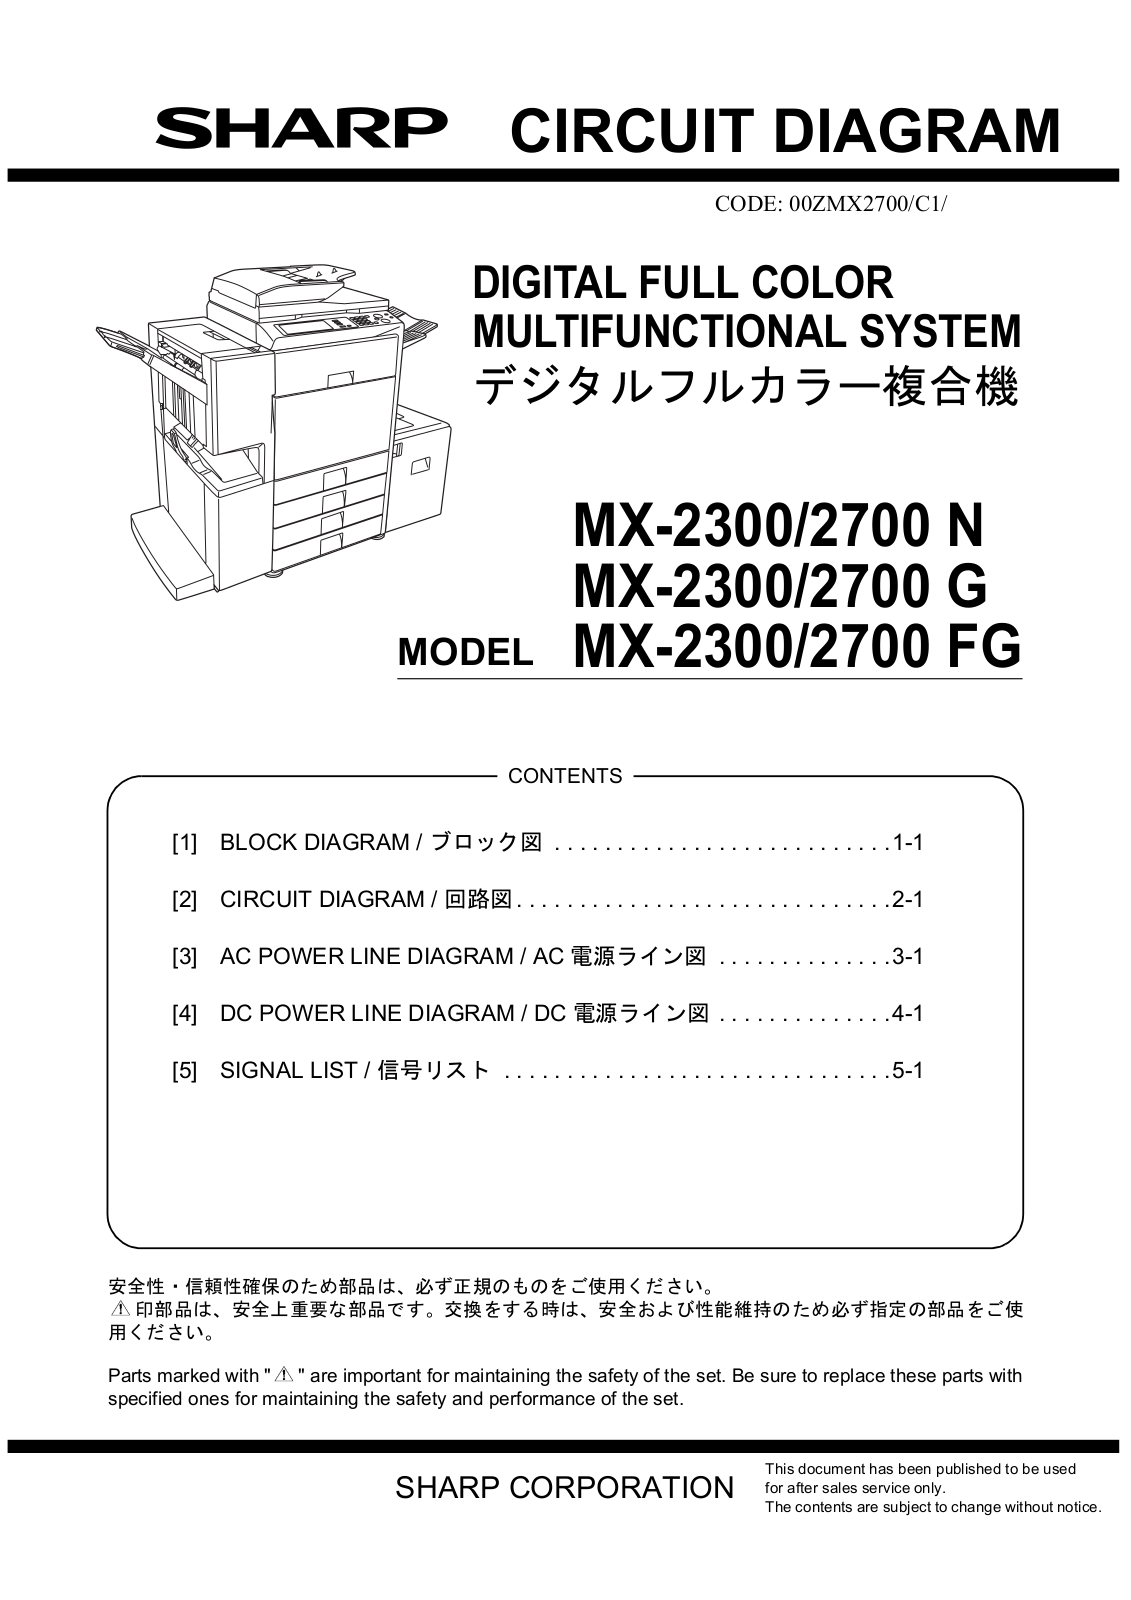 SHARP MX2700CD, MX-2300N, MX-2300G, MX-2300FG, MX-2700N Service Manual